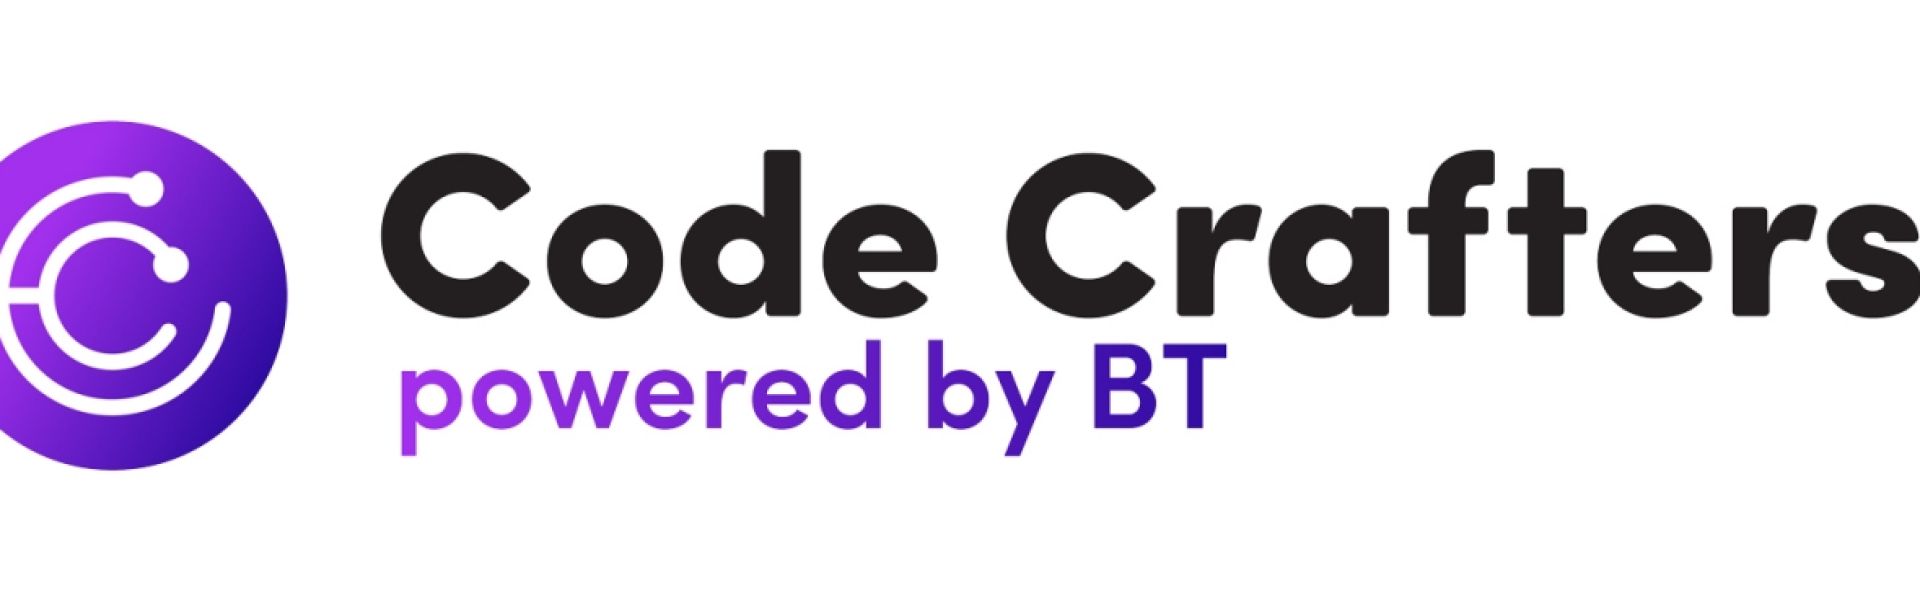 Code Crafters, companie de tehnologie a BT